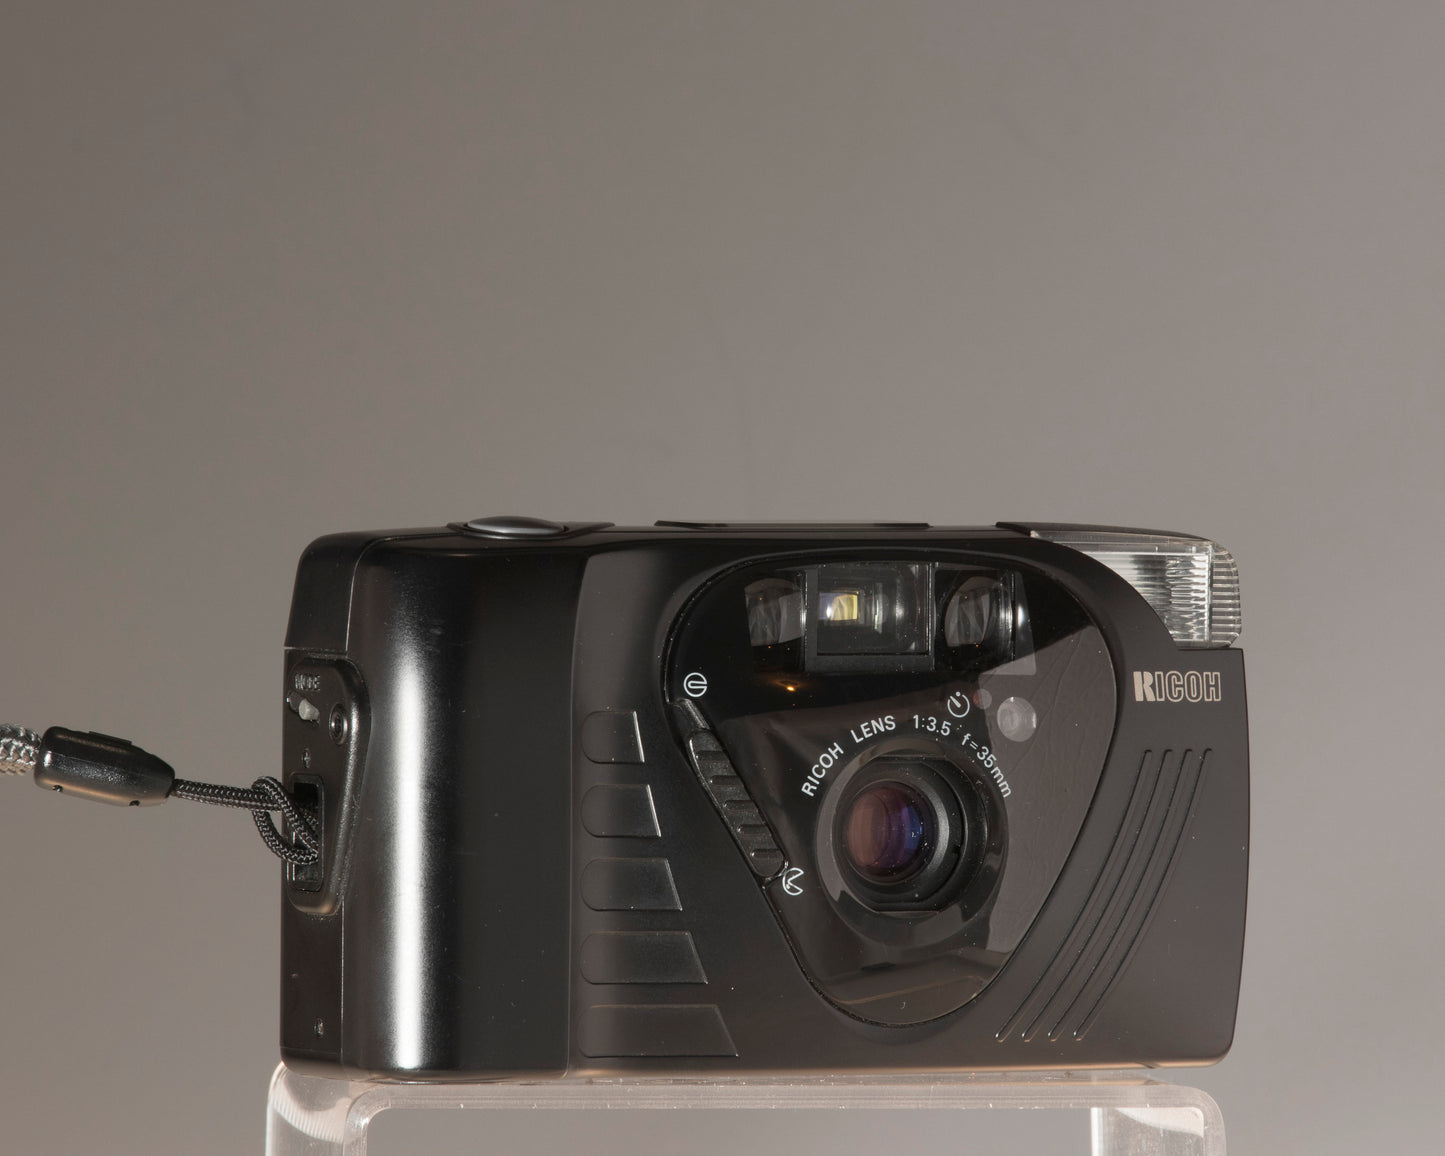 Ricoh FF-9 compact 35mm film camera